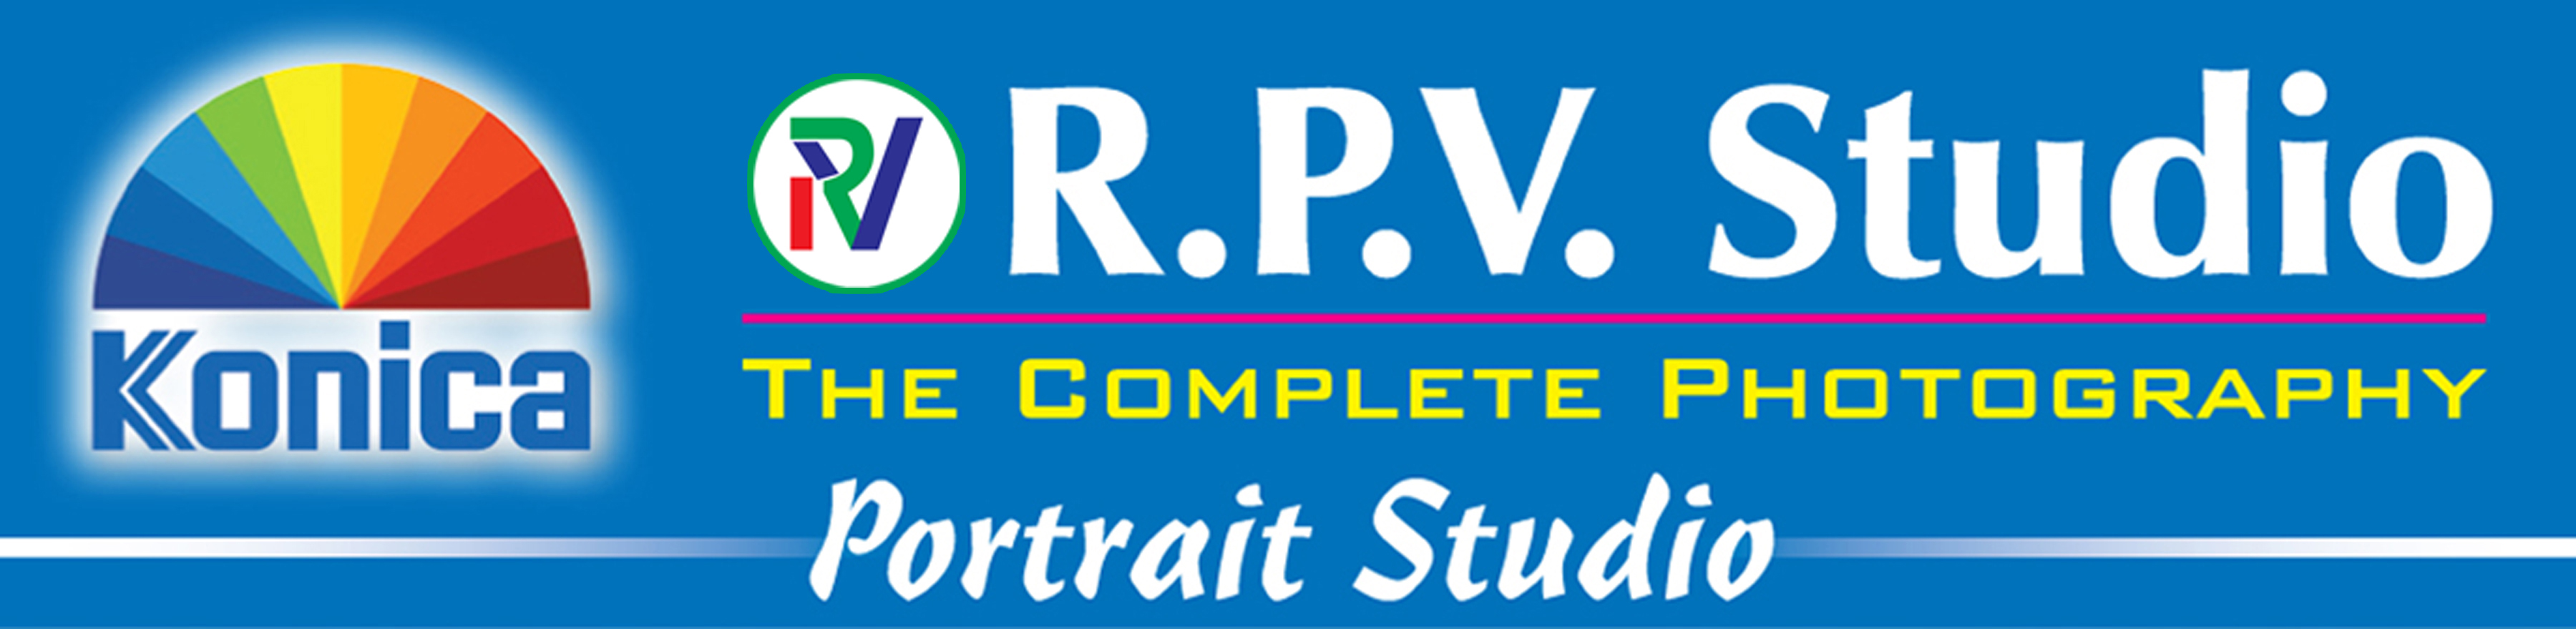 R.P.V. Studio Logo